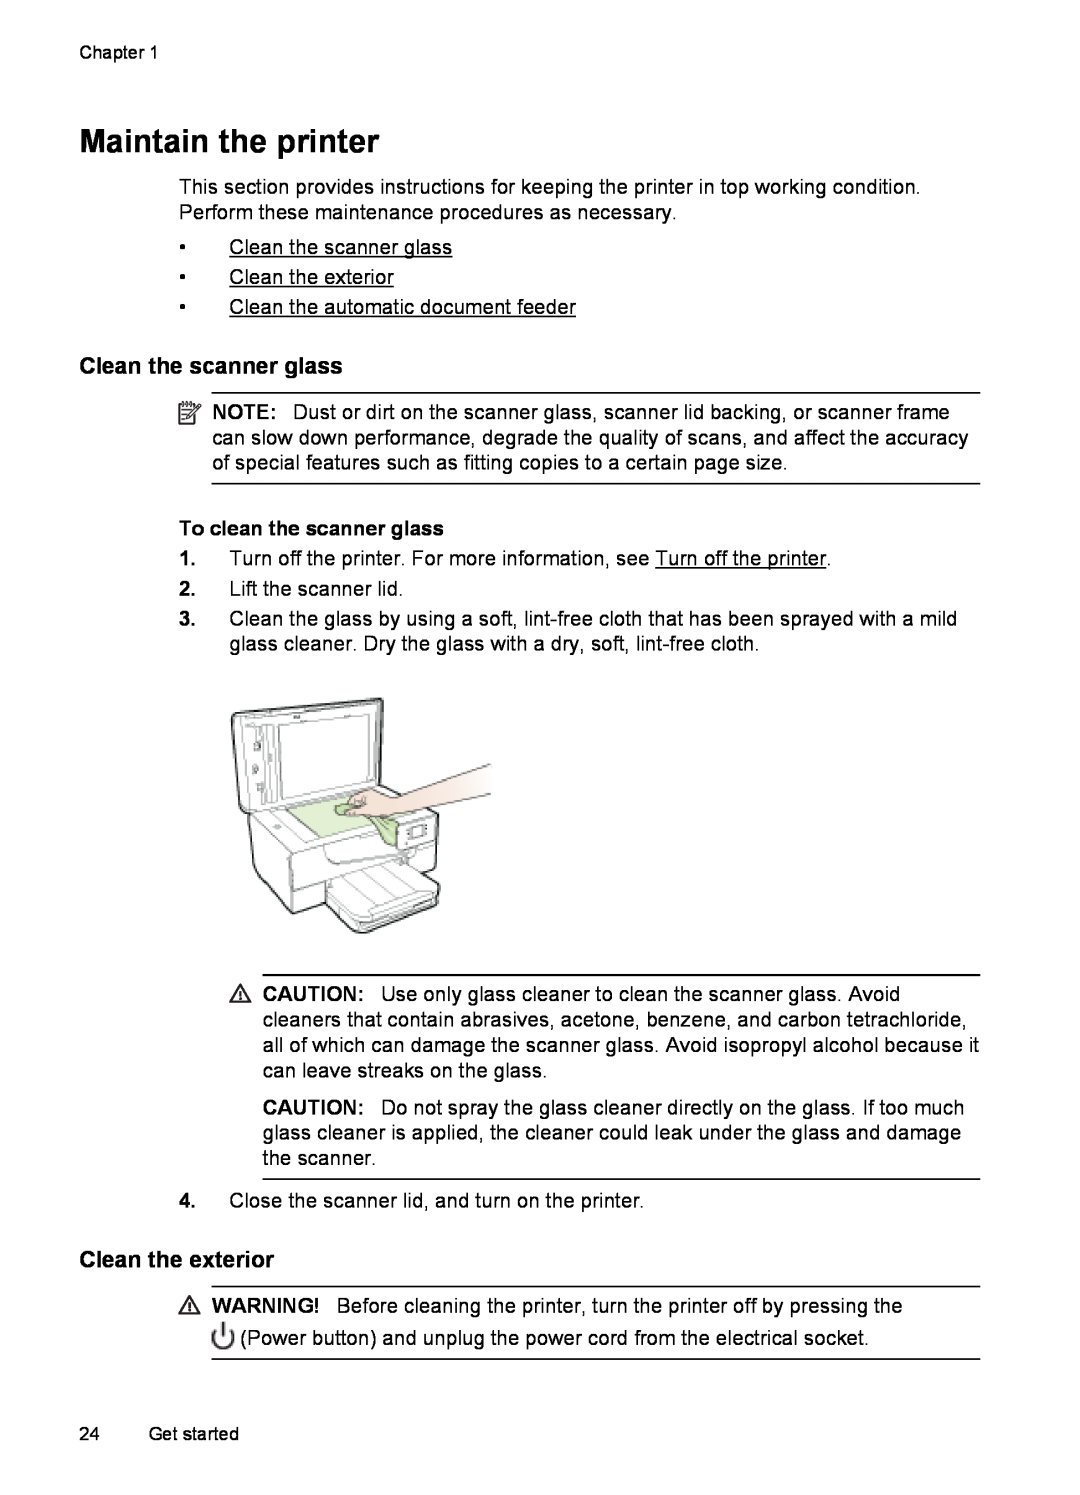 HP 6600 - H7 manual Maintain the printer, Clean the scanner glass, Clean the exterior, To clean the scanner glass 